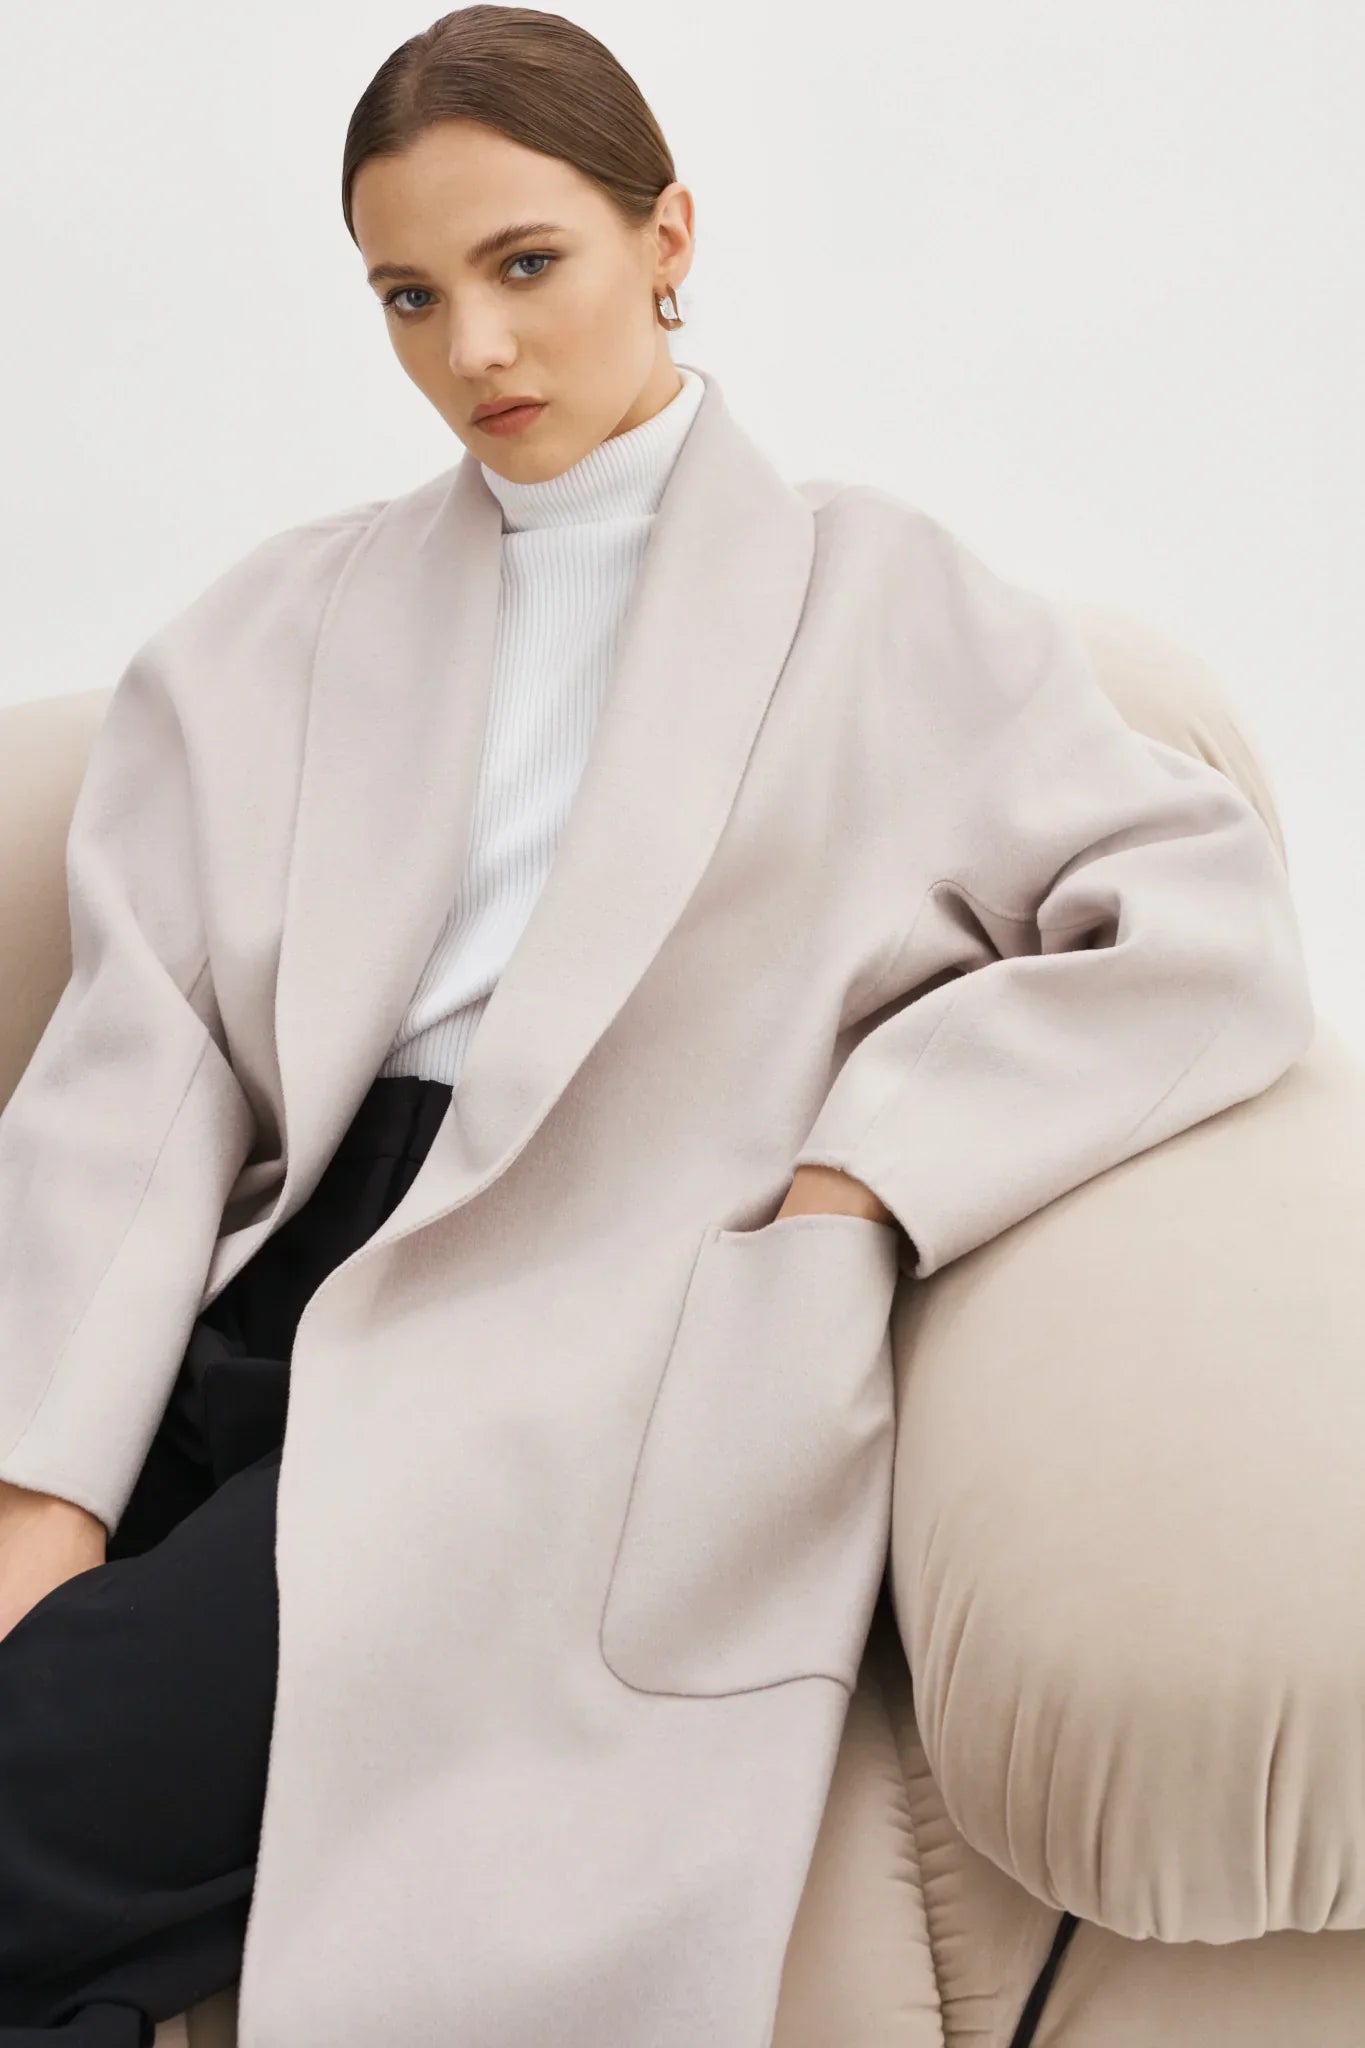 Lamarque Thara Double Faced Wool Coat - Grey